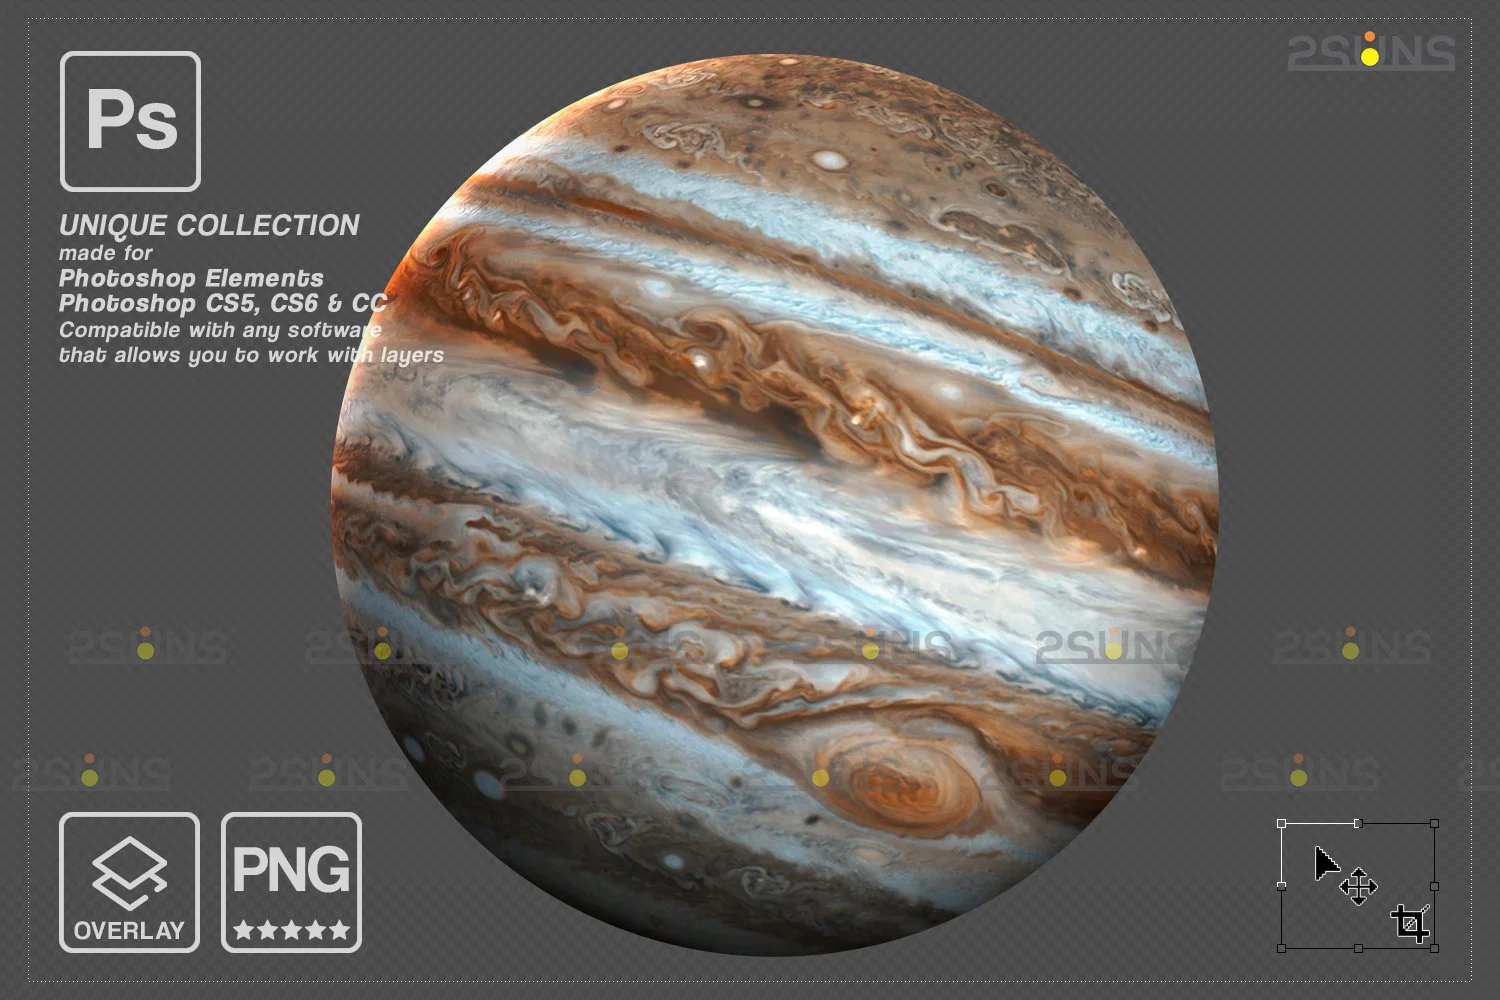 2328 11款行星宇宙太空PHOTOSHOP覆盖PNG空间剪贴画夜空 Space planets v3 photo overlays